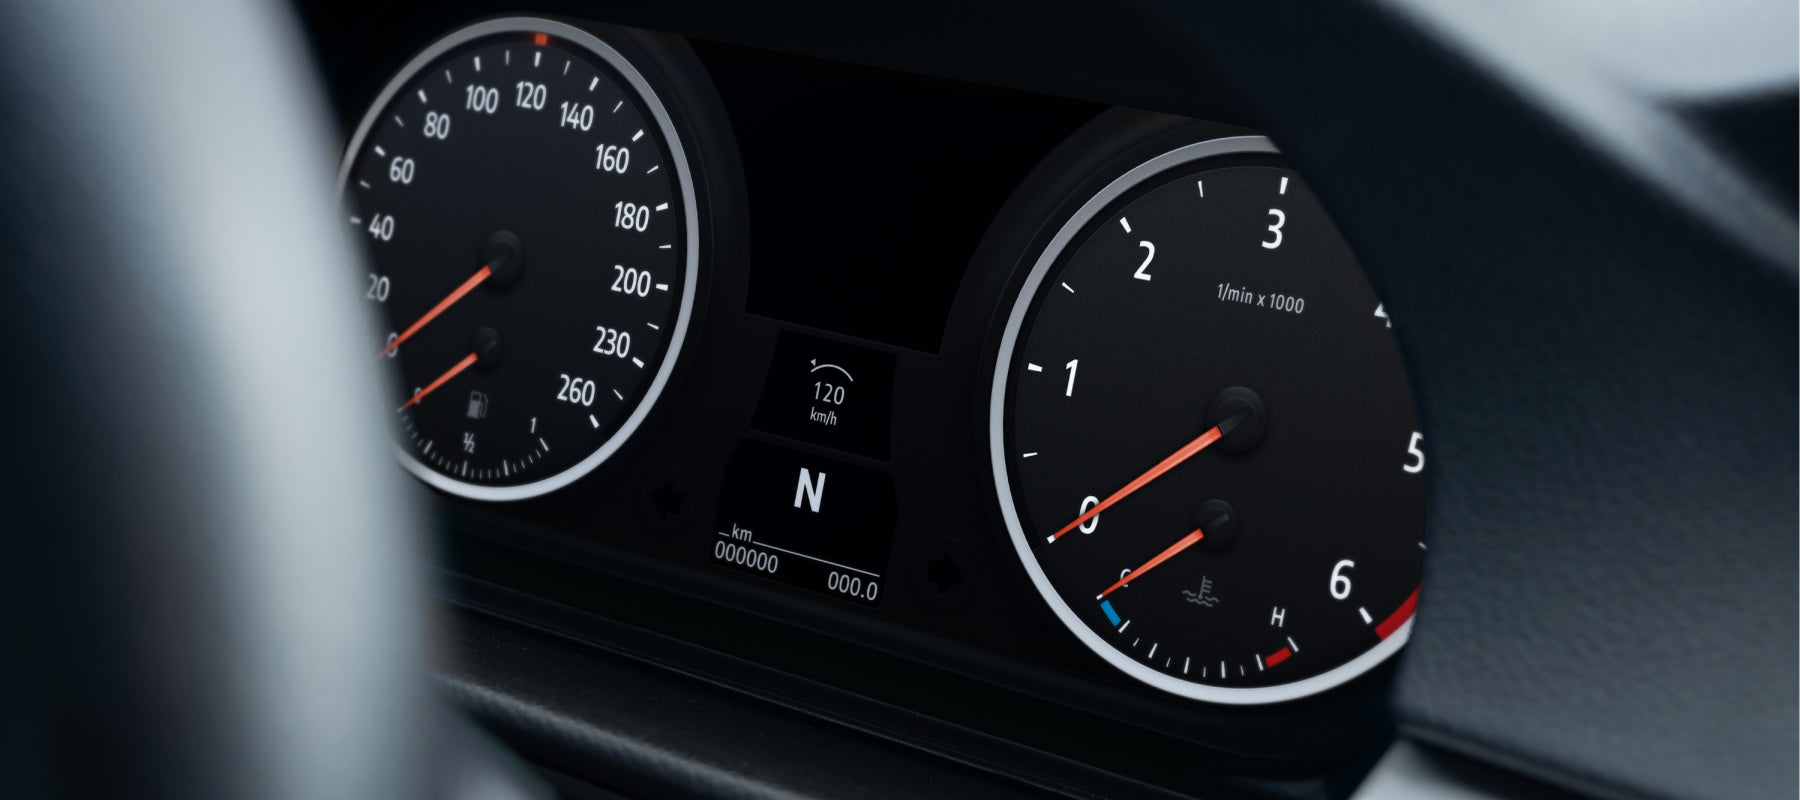 BMW 1 Series digital dash gauge cluster